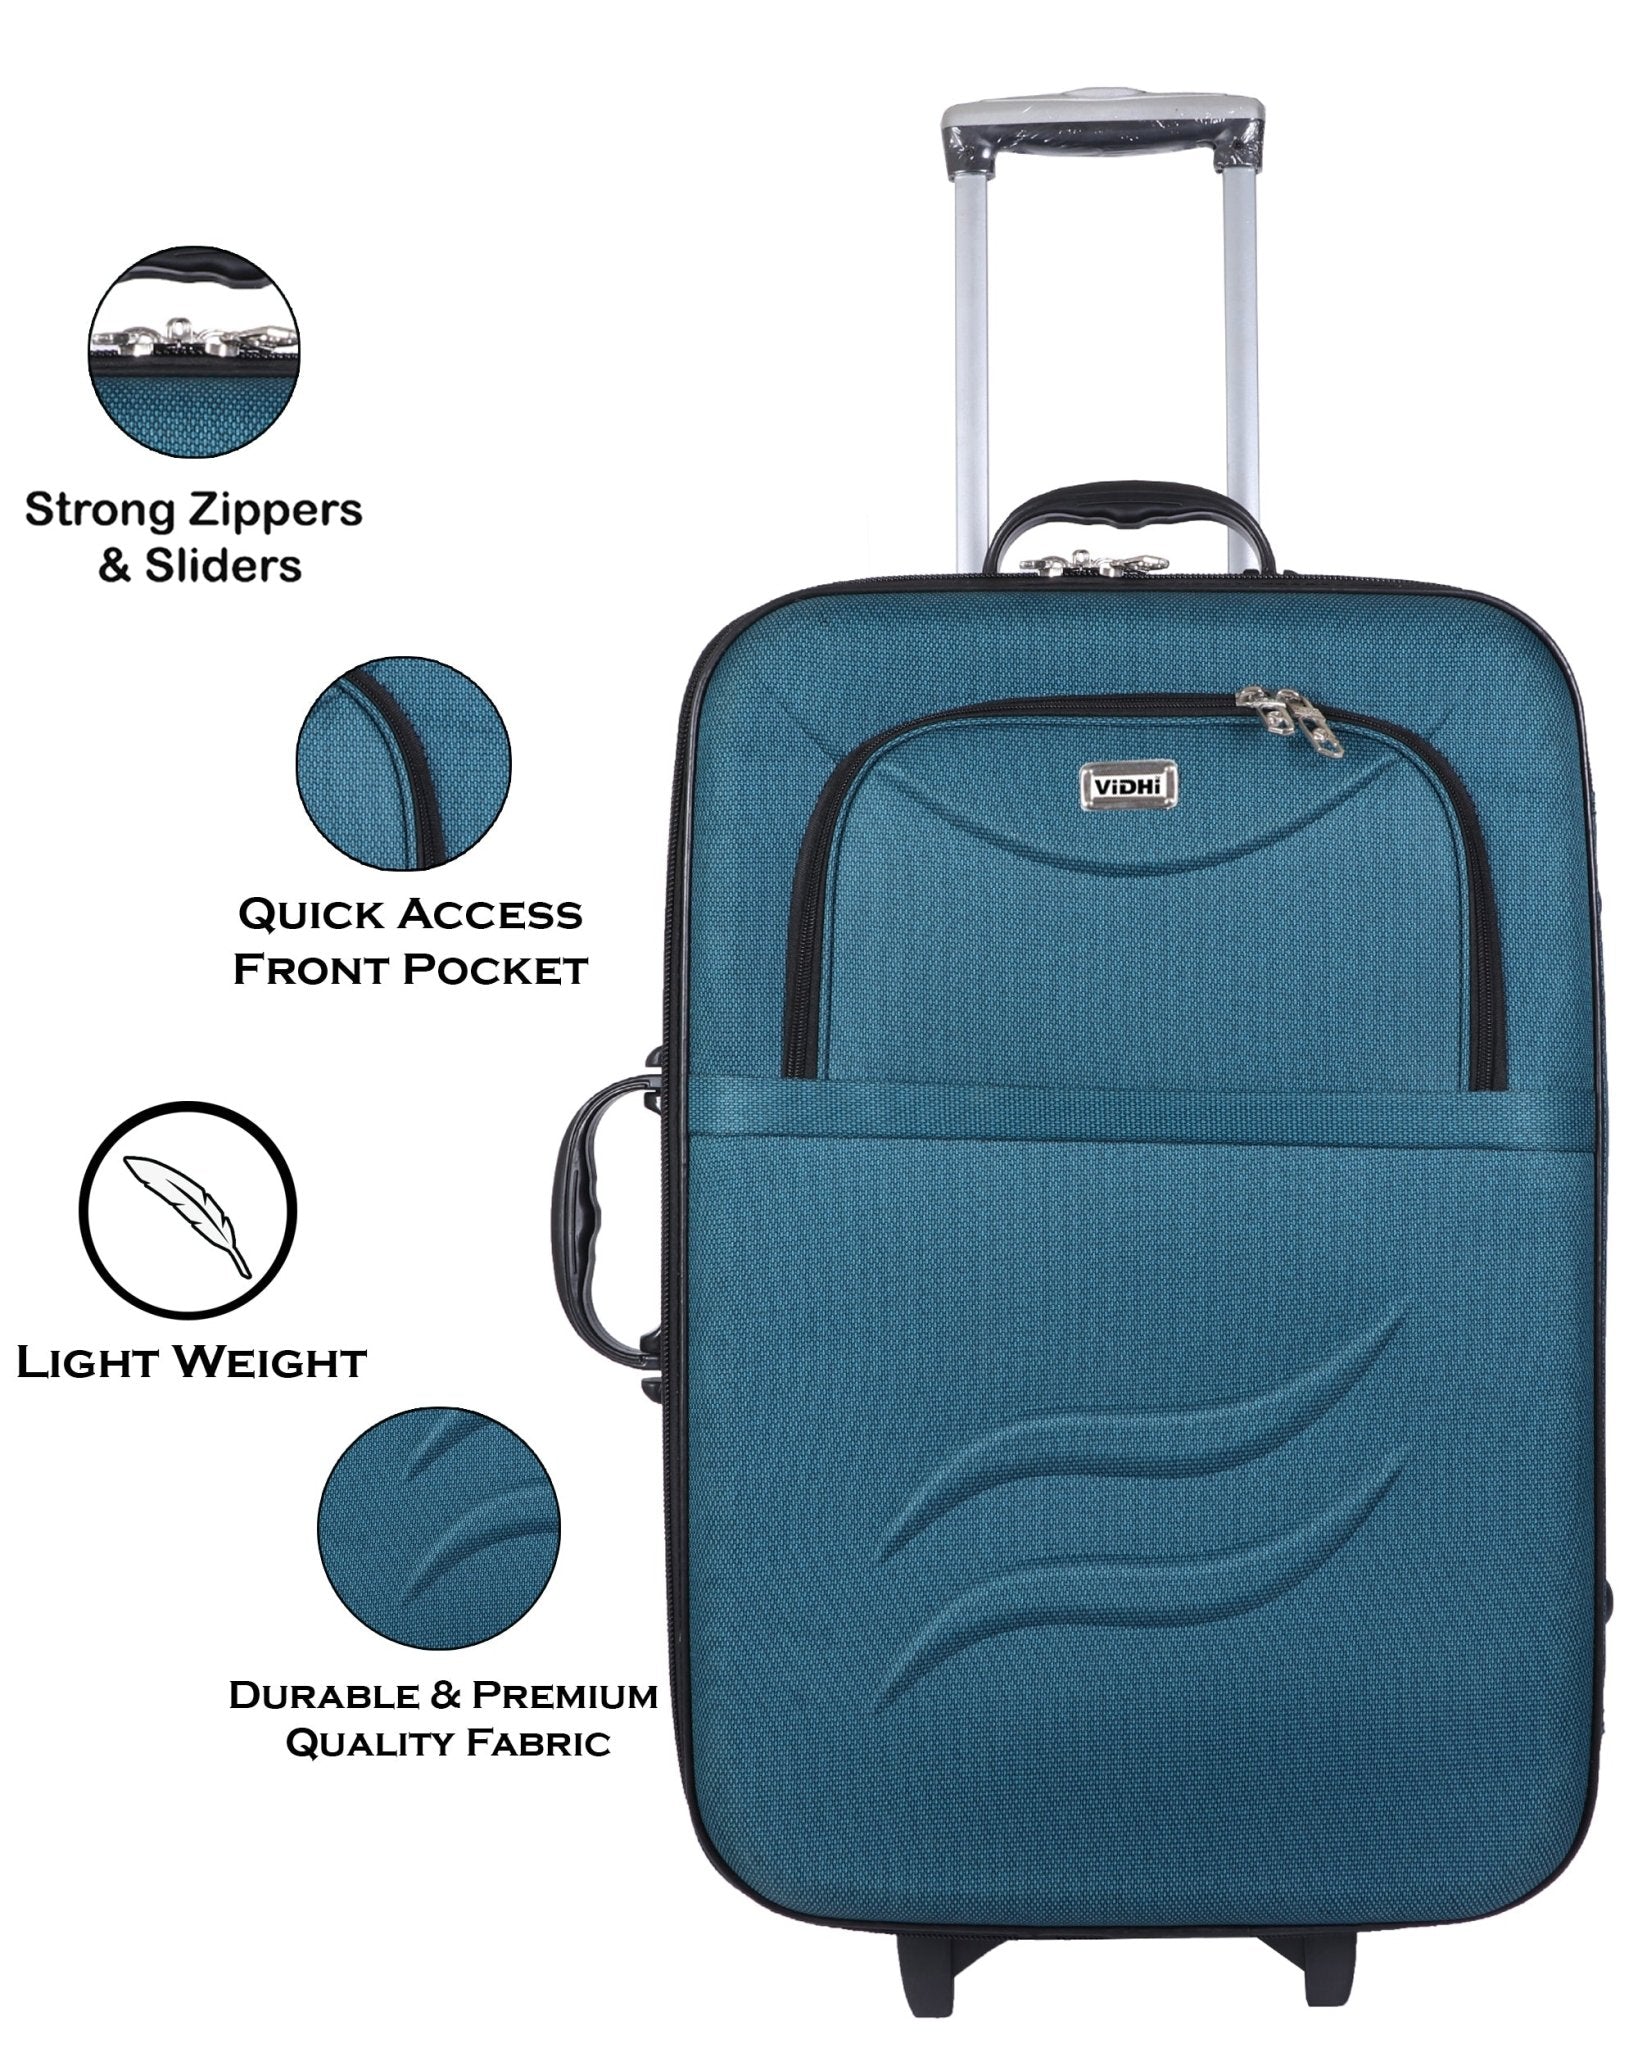 Sharp Luggage | Travel trolley luggage with organized interior